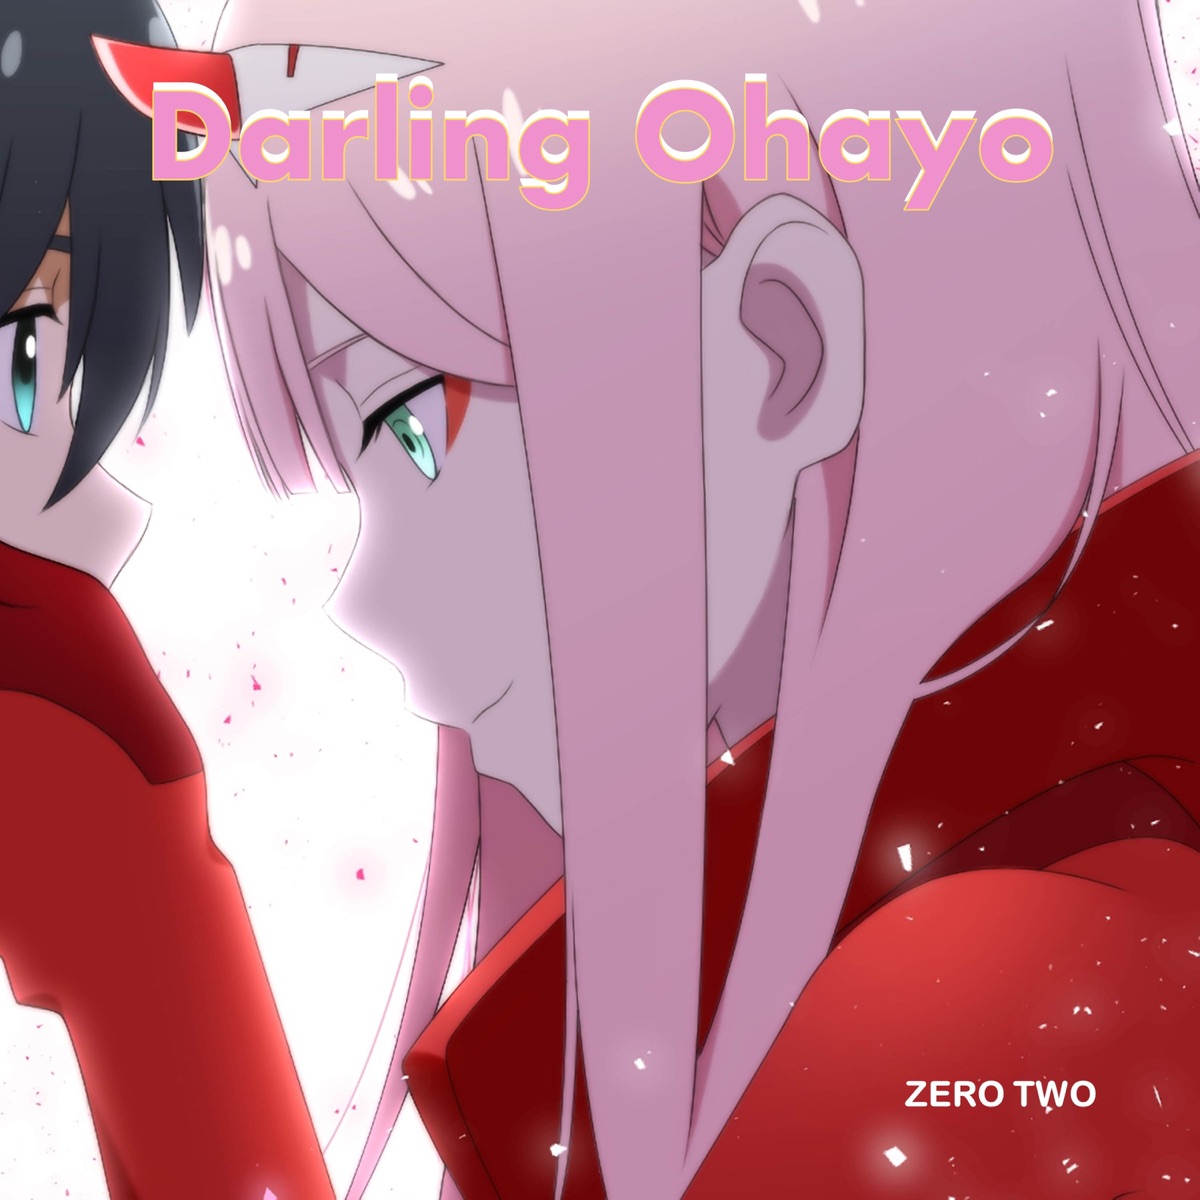 𝐚𝐧𝐢𝐦𝐞 𝐚𝐞𝐬𝐭𝐡𝐞𝐭𝐢𝐜 - Darling ohayo